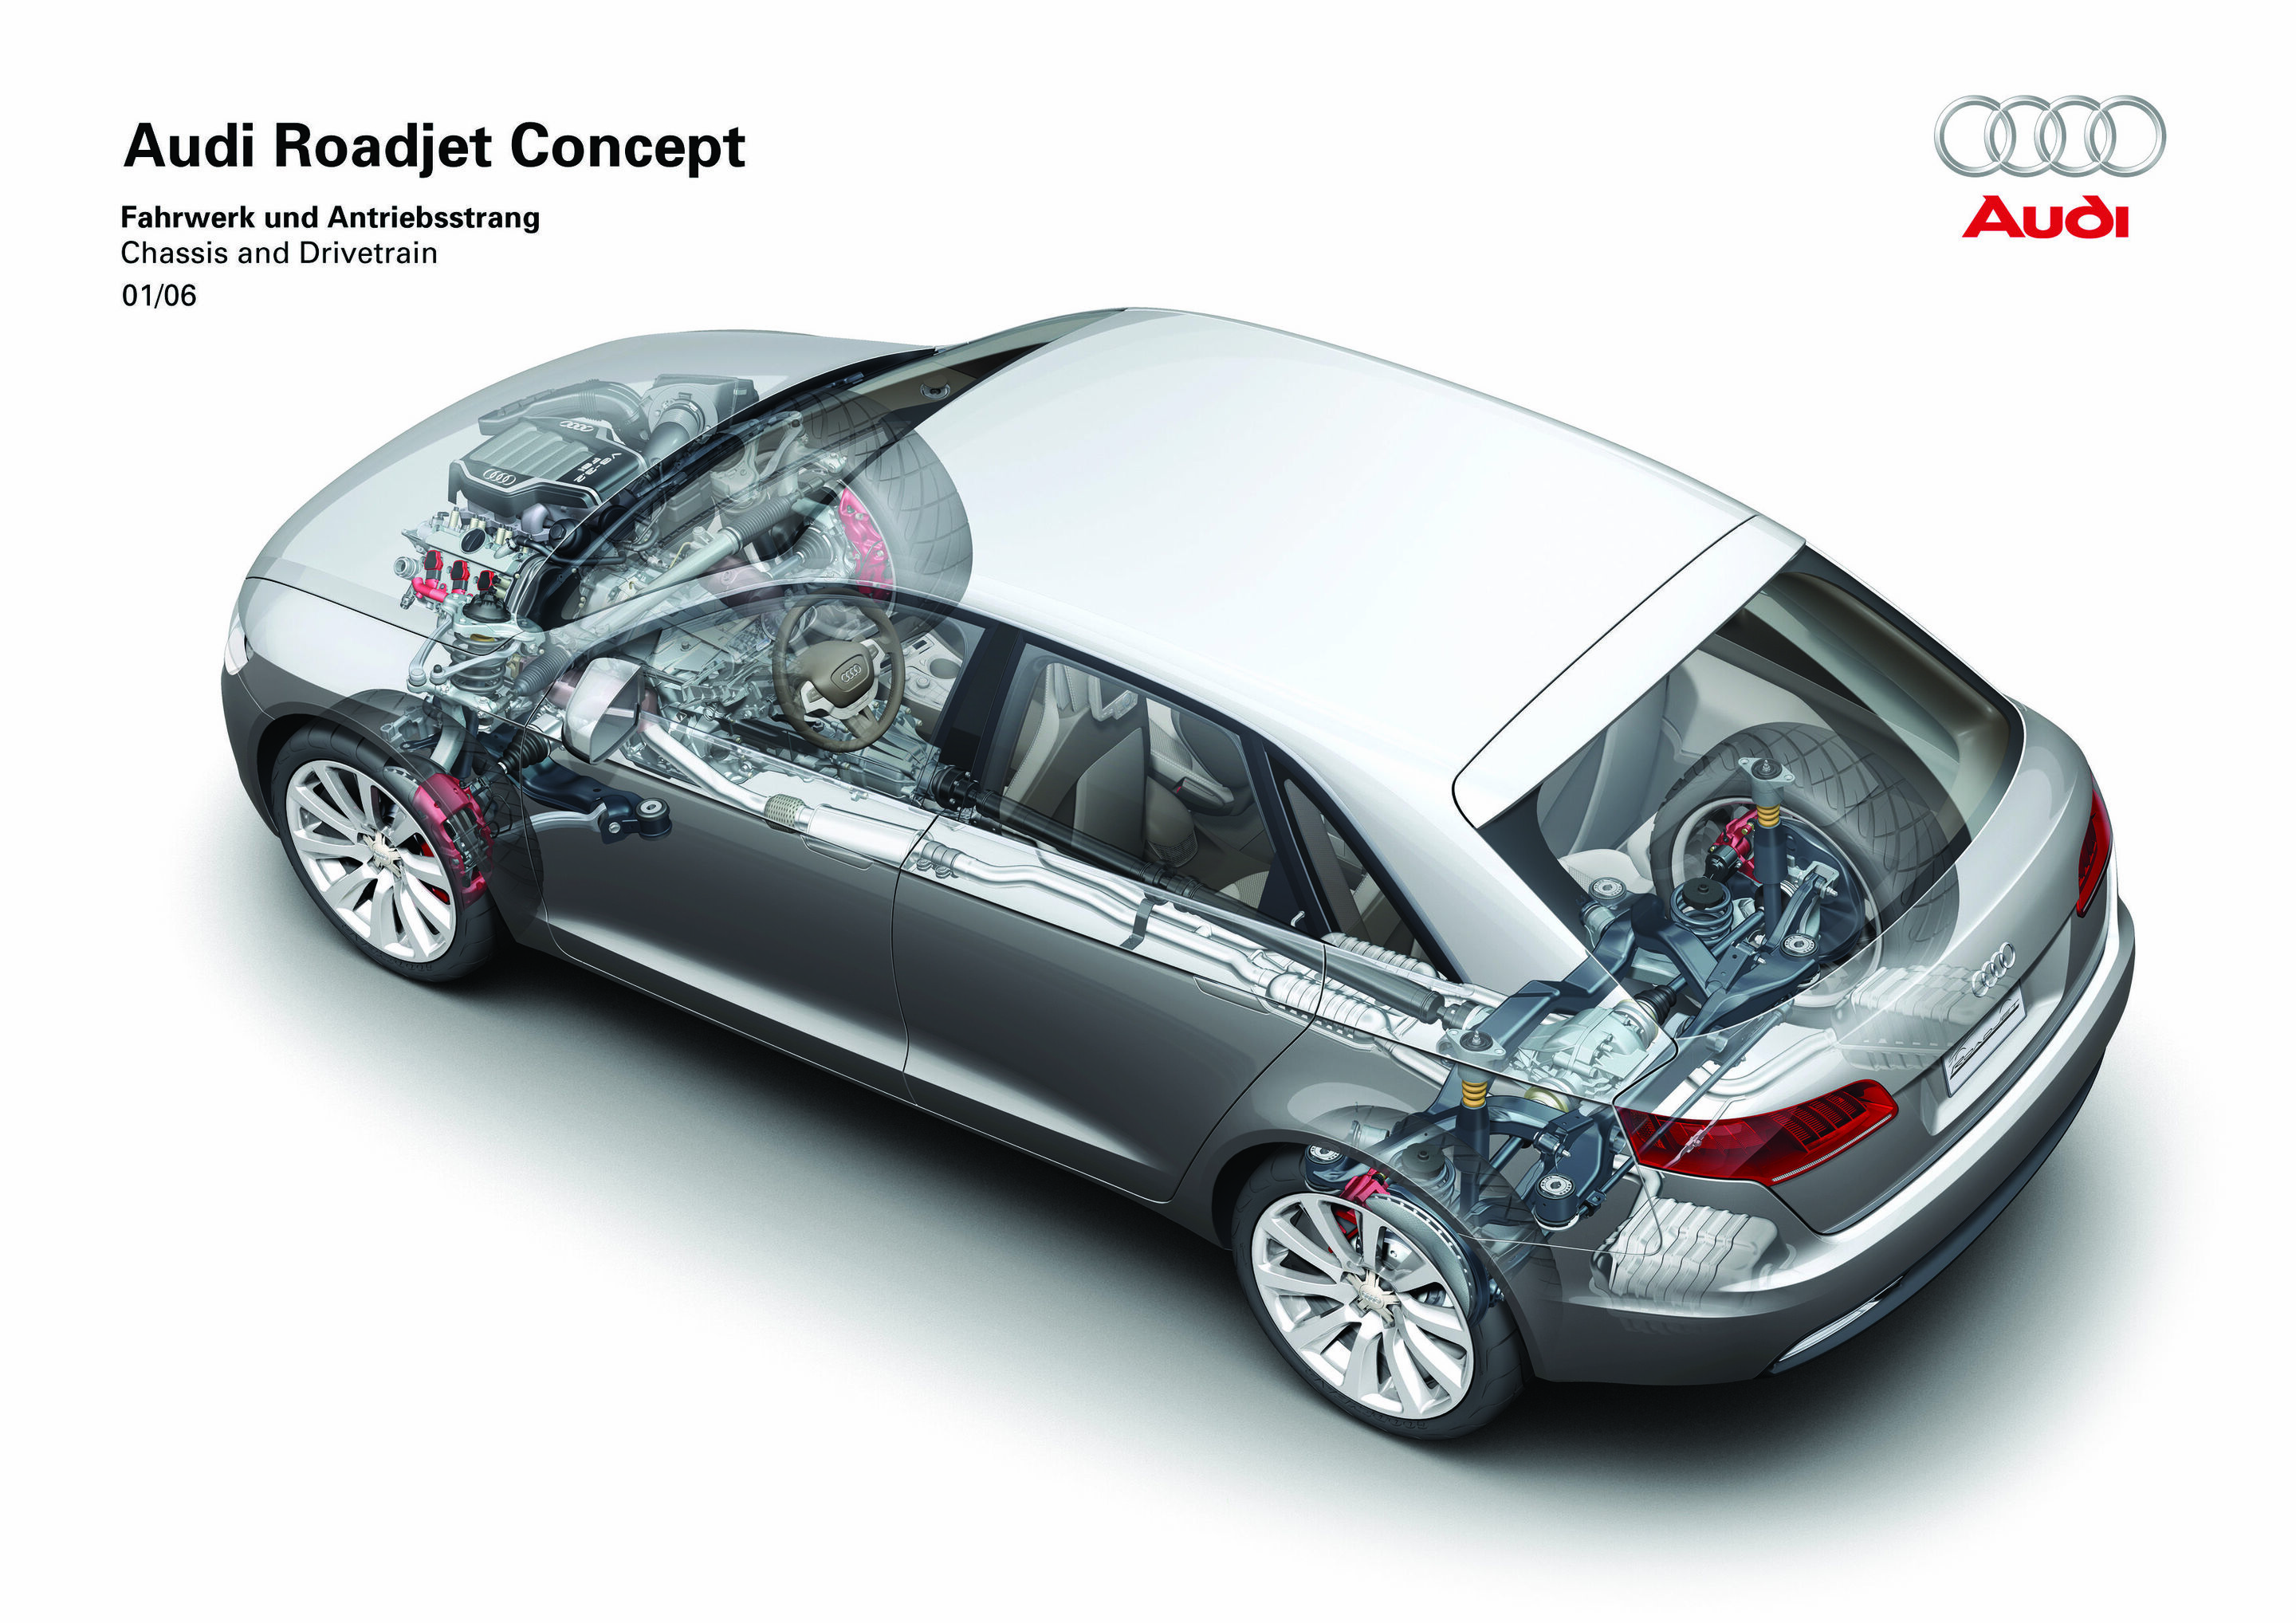 Audi Roadjet Concept - Fahrwerk und Antriebsstrang